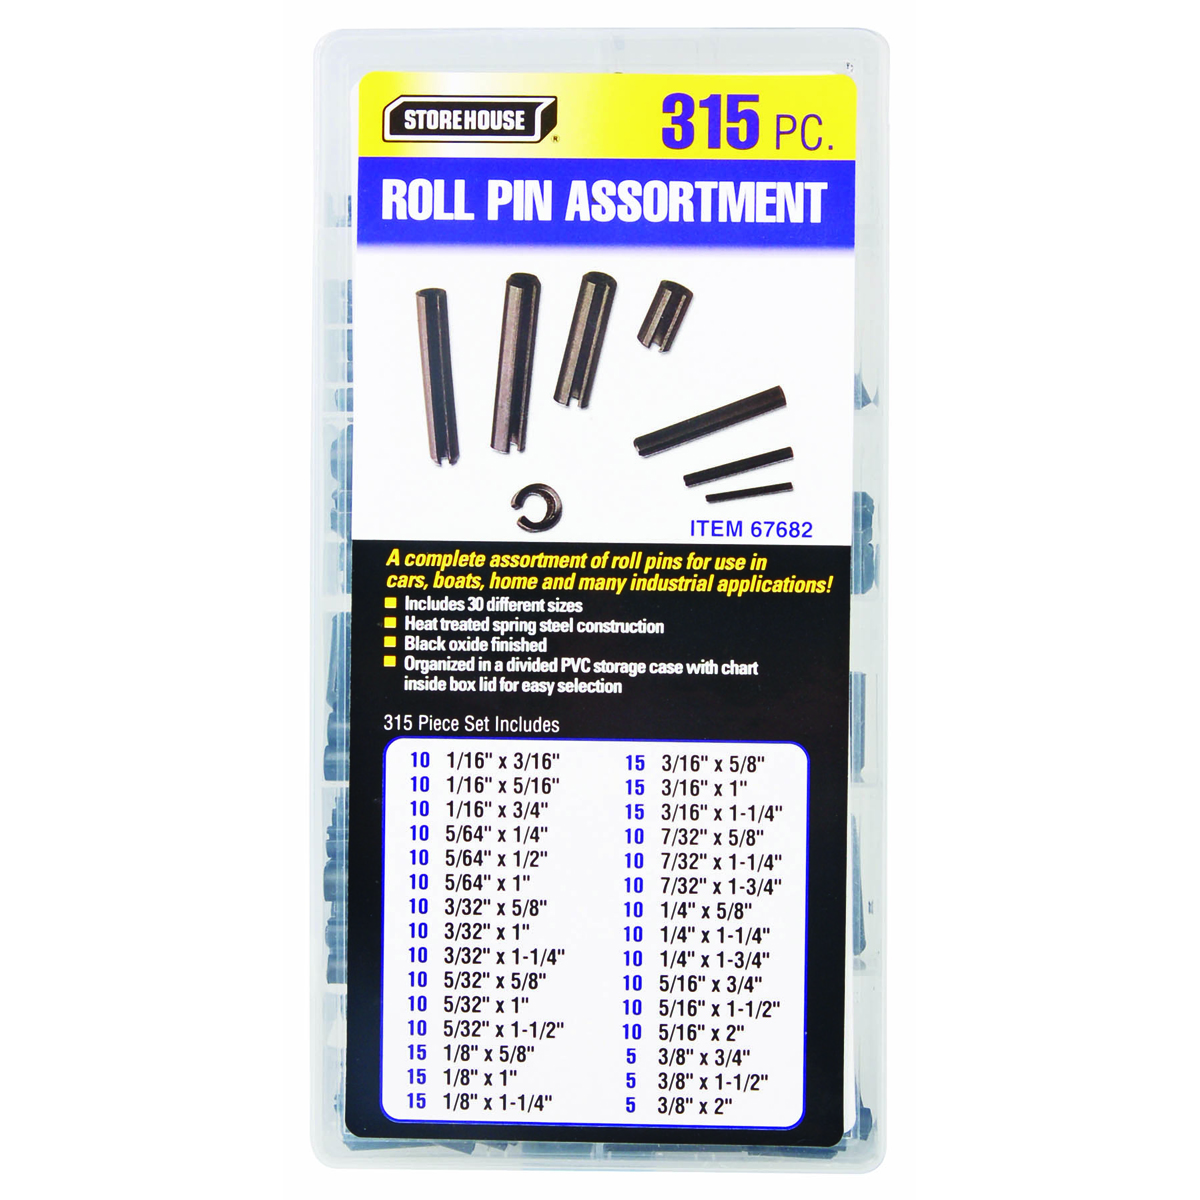 STOREHOUSE 315 Piece Roll Pin Assortment - Item 67682